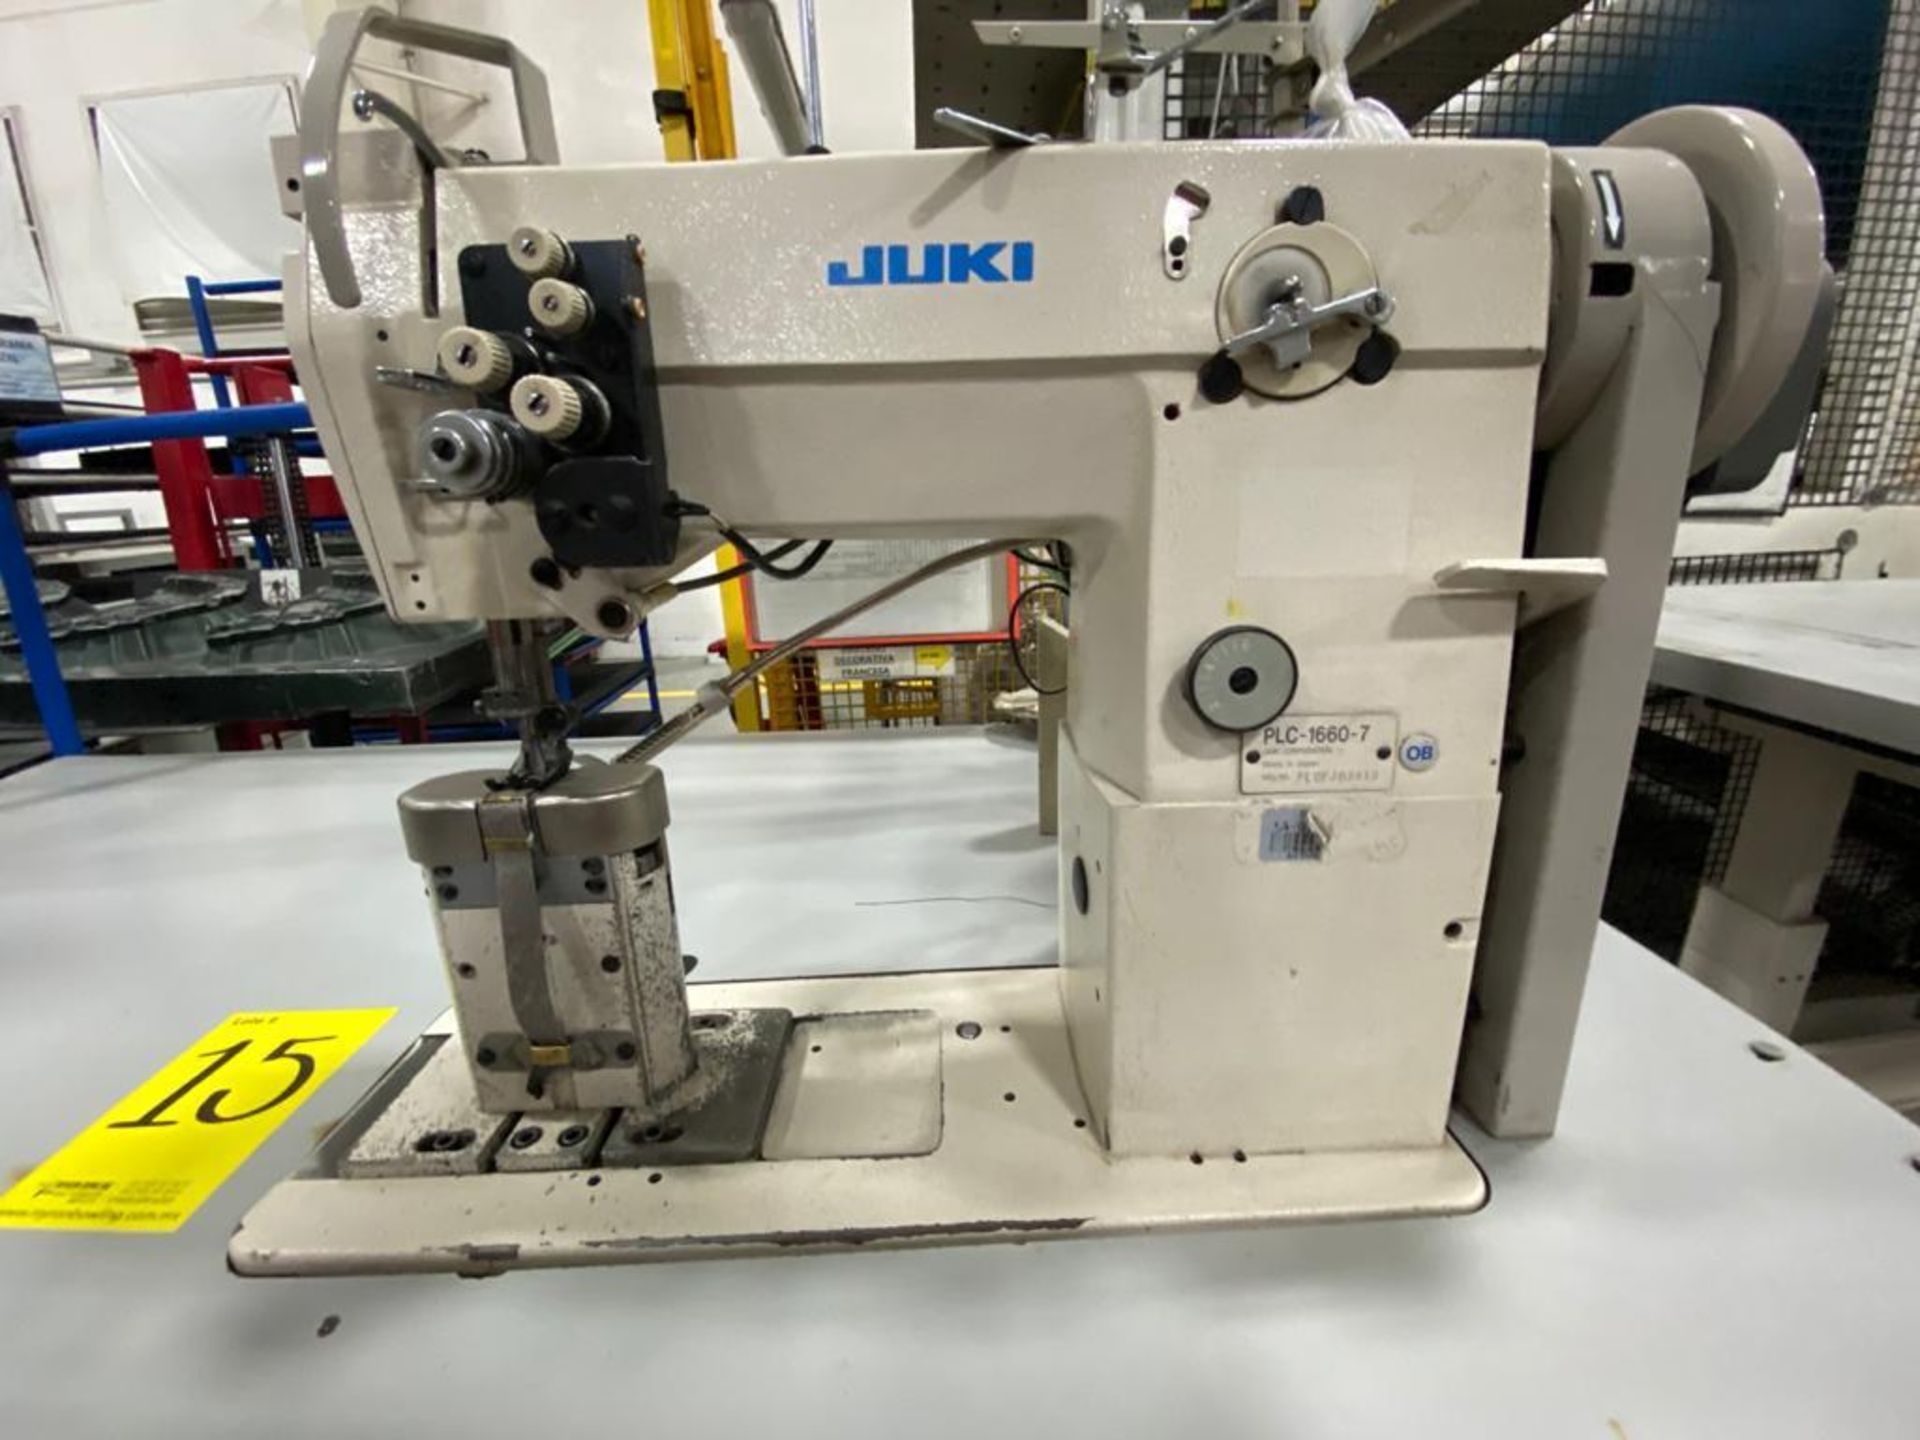 Juki Pole Sewing Machine of two needles, model PLC-1660-7, Serie number PLCFJ03413